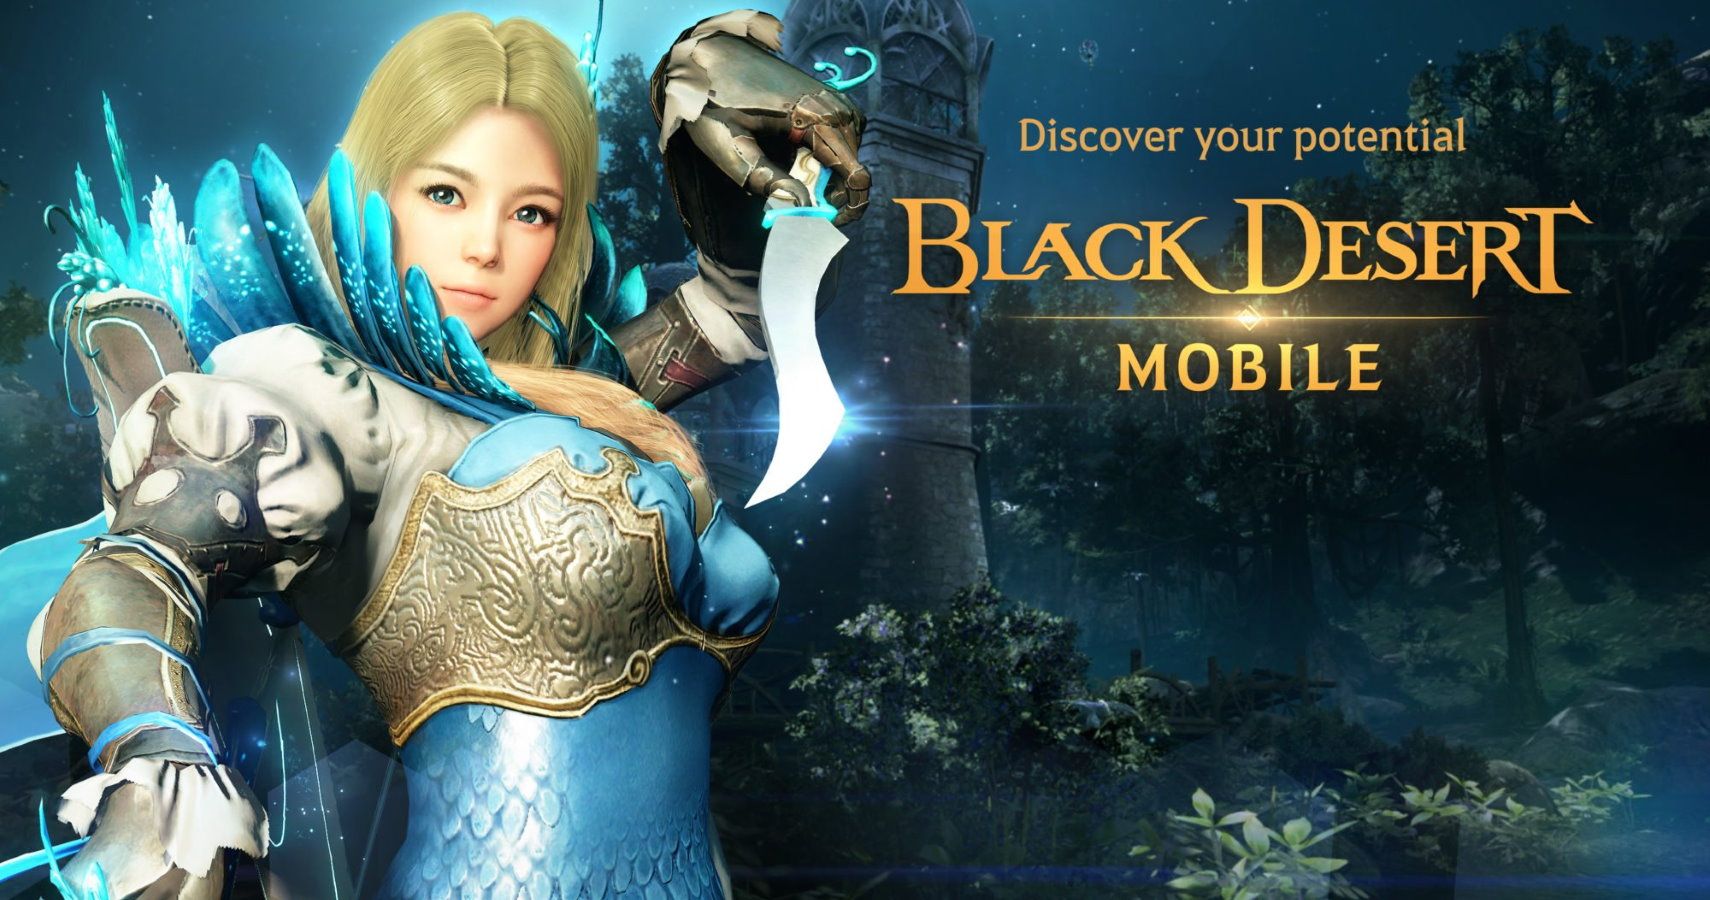 Black Desert Mobile Introduces New Trading System, Merchantry